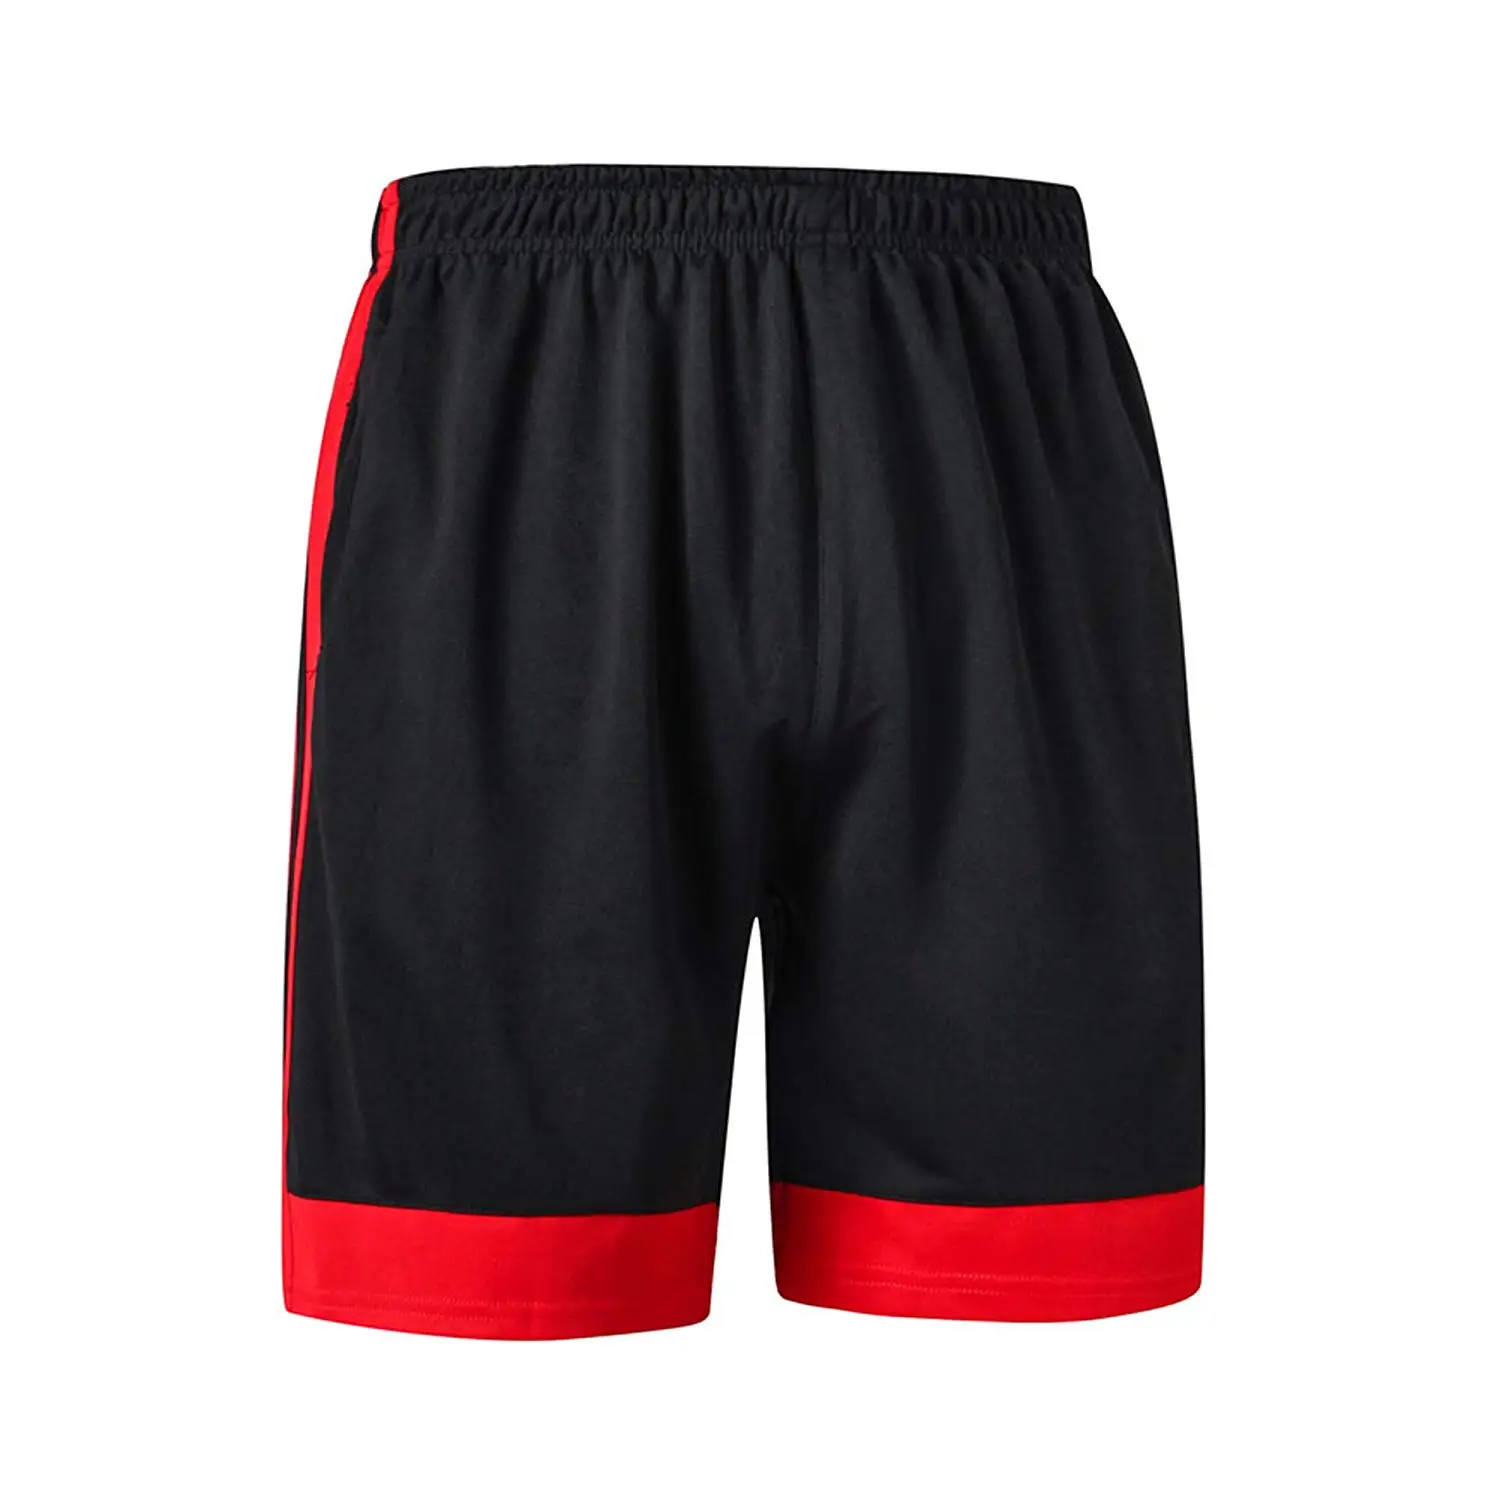 umbro basketball shorts